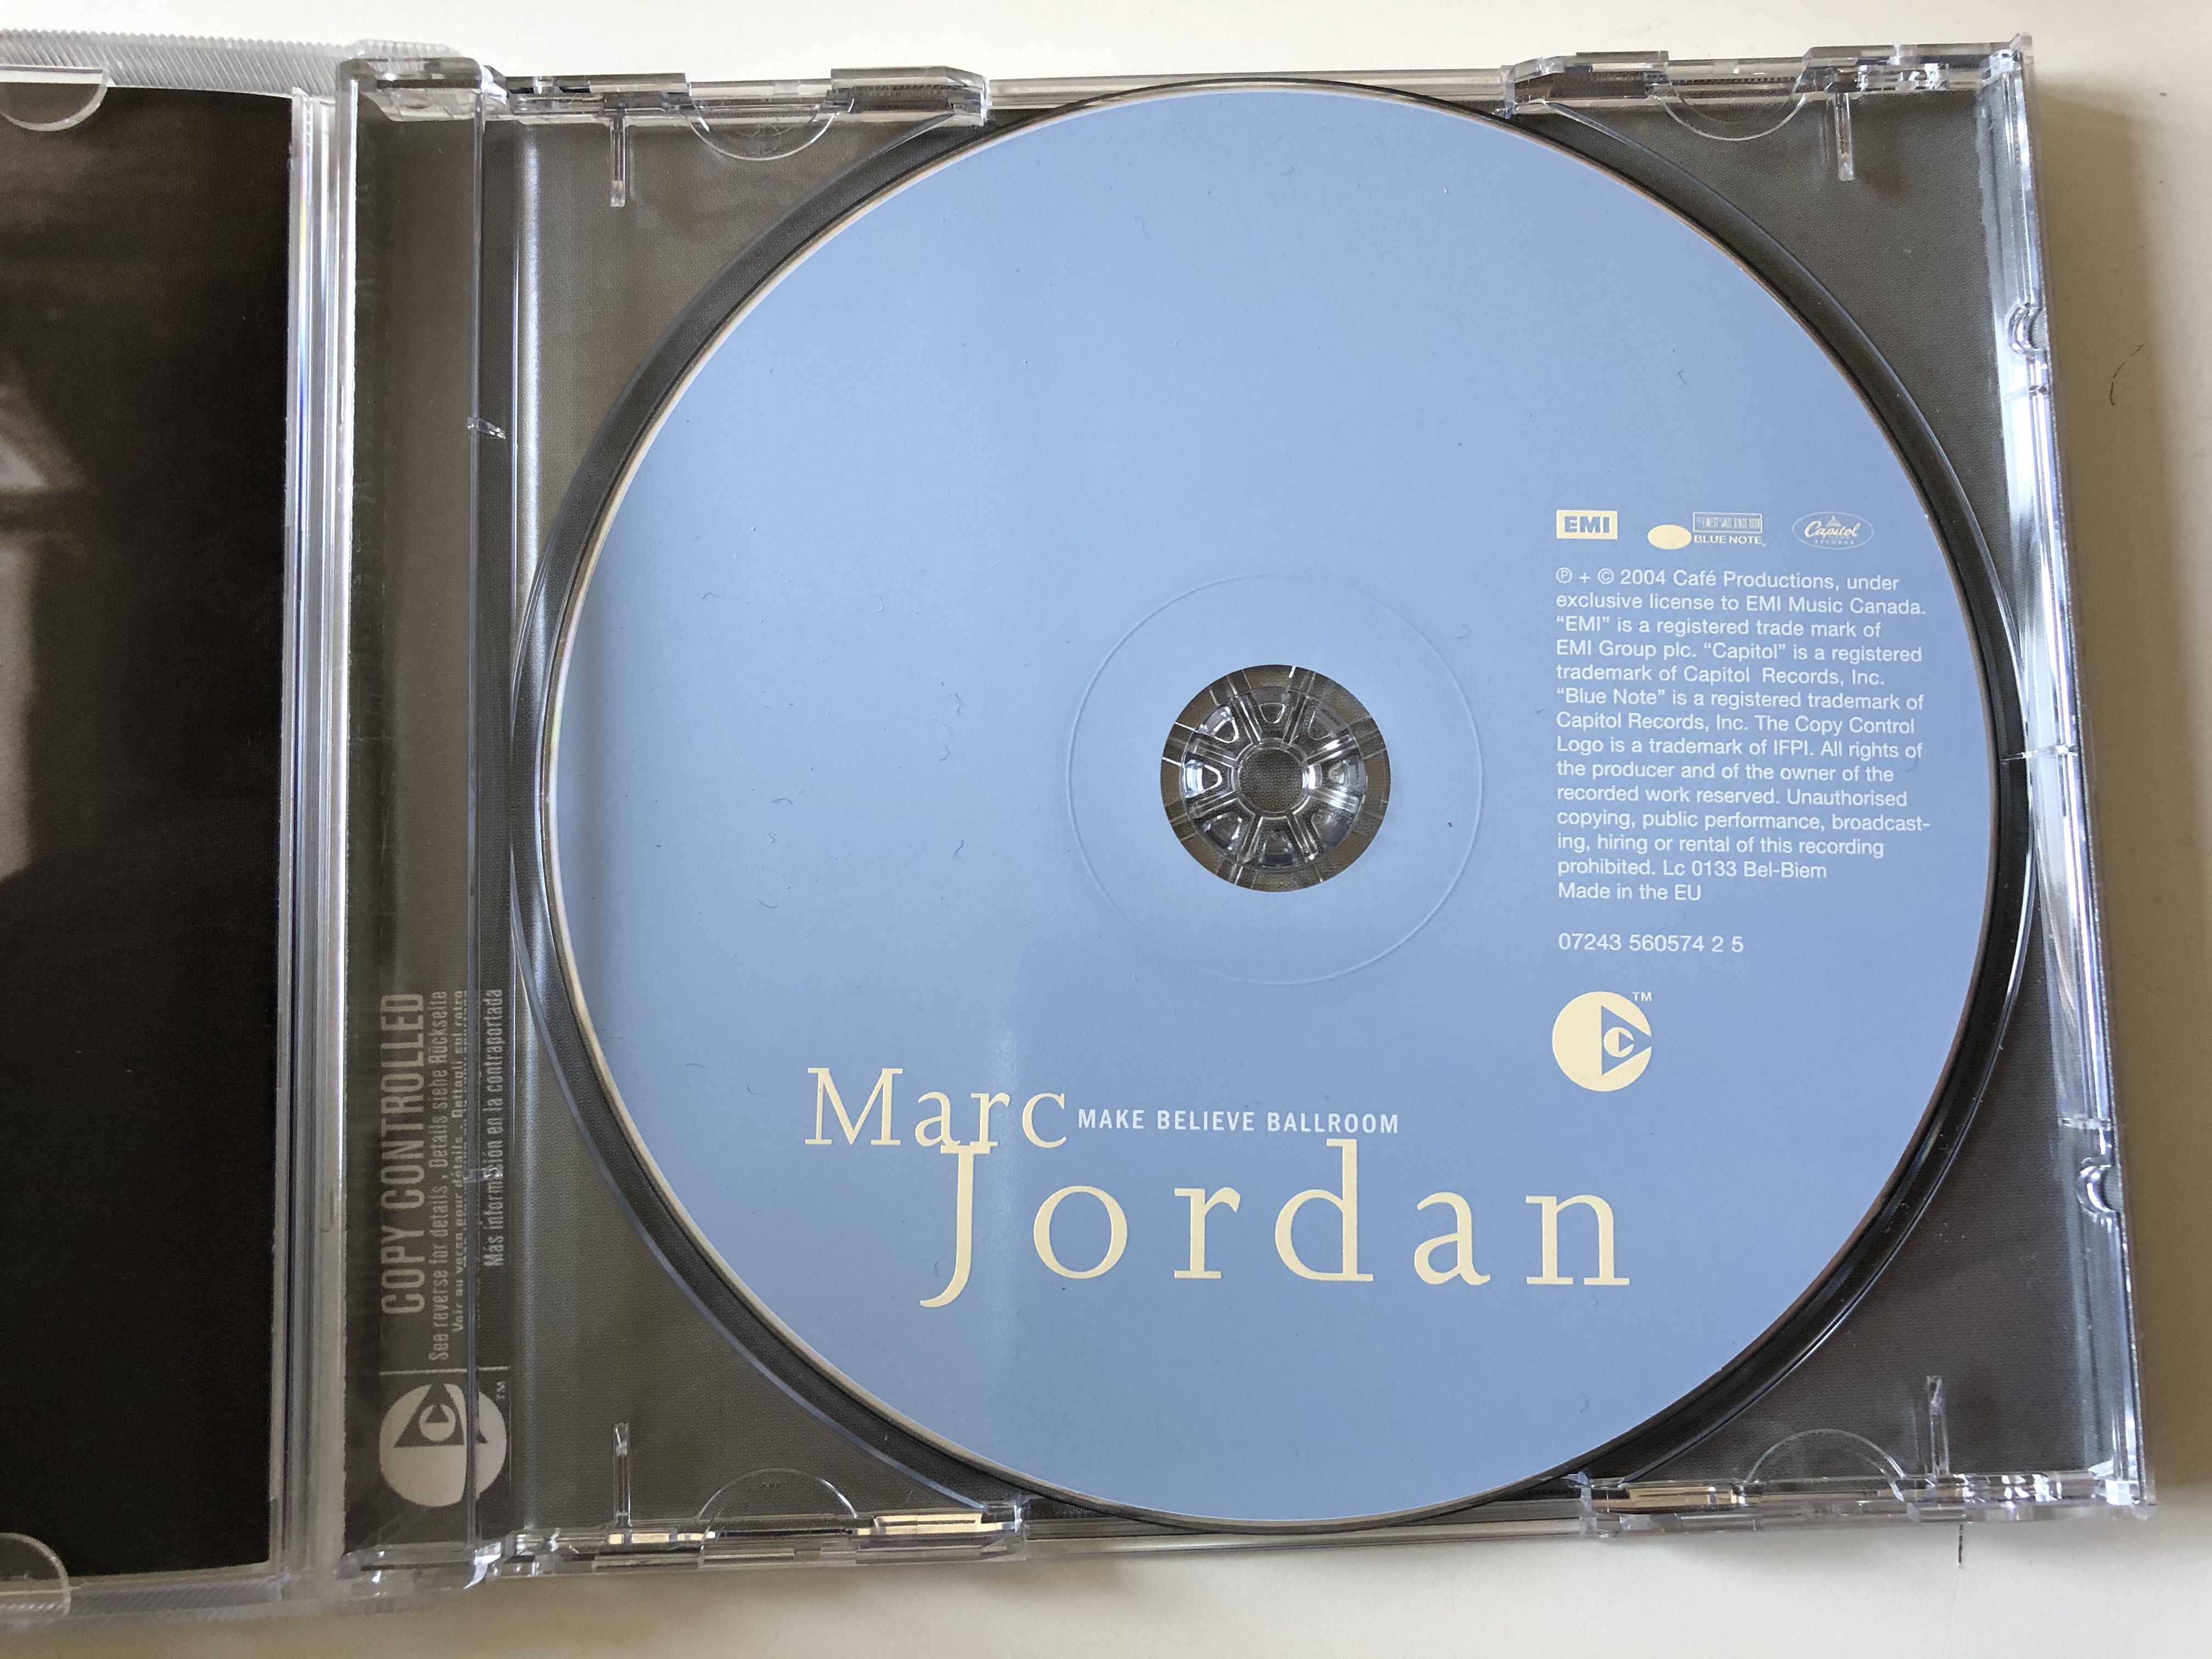 marc-jordan-make-believe-ballroom-emi-audio-cd-2004-724356057425-2-.jpg